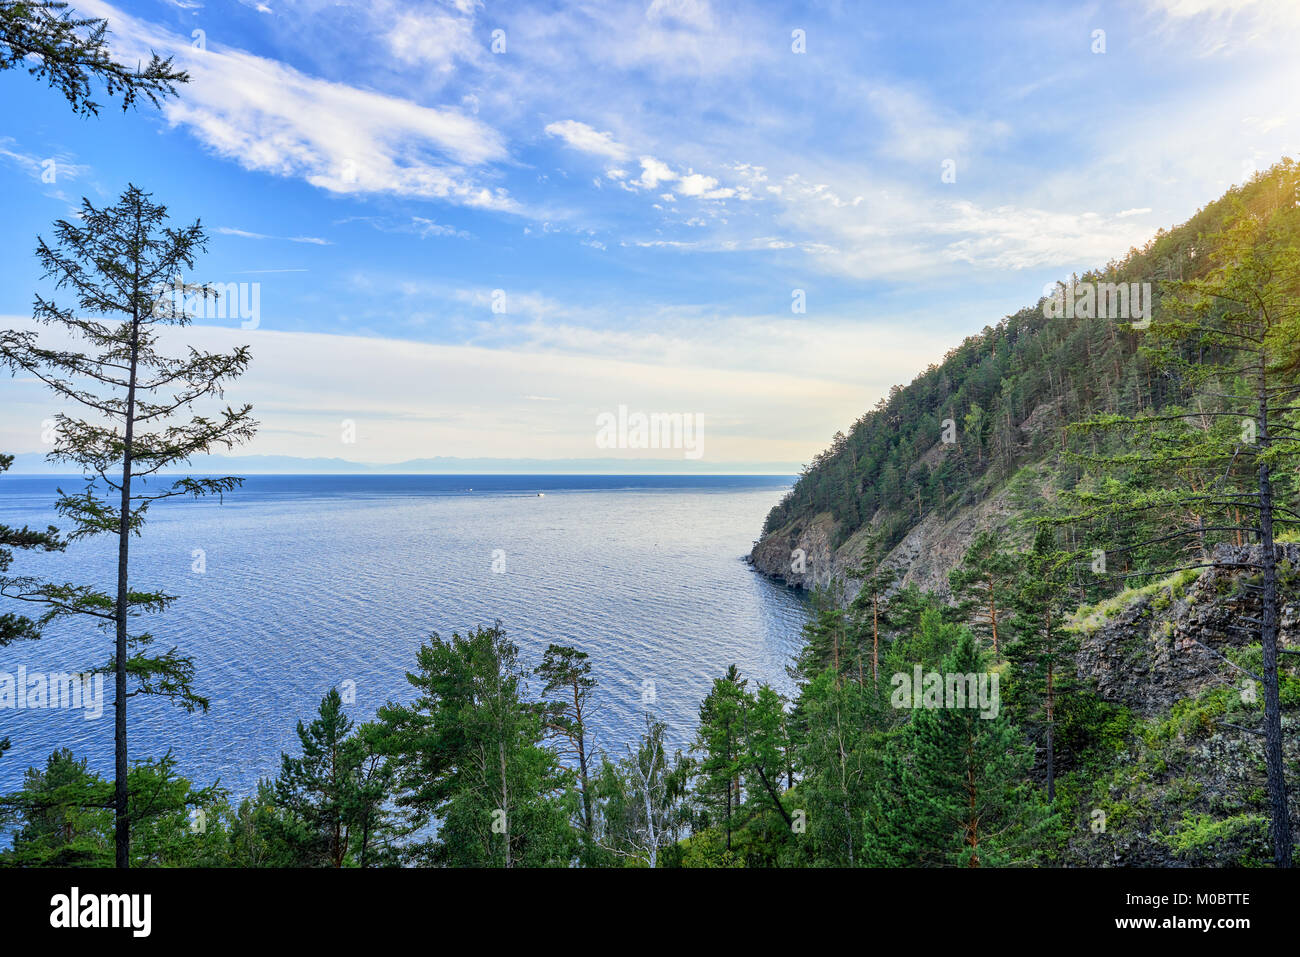 Baikalsee in der Nähe von Dorf Listwjanka. Juli Landschaft. Irkutsk Region. Russland Stockfoto